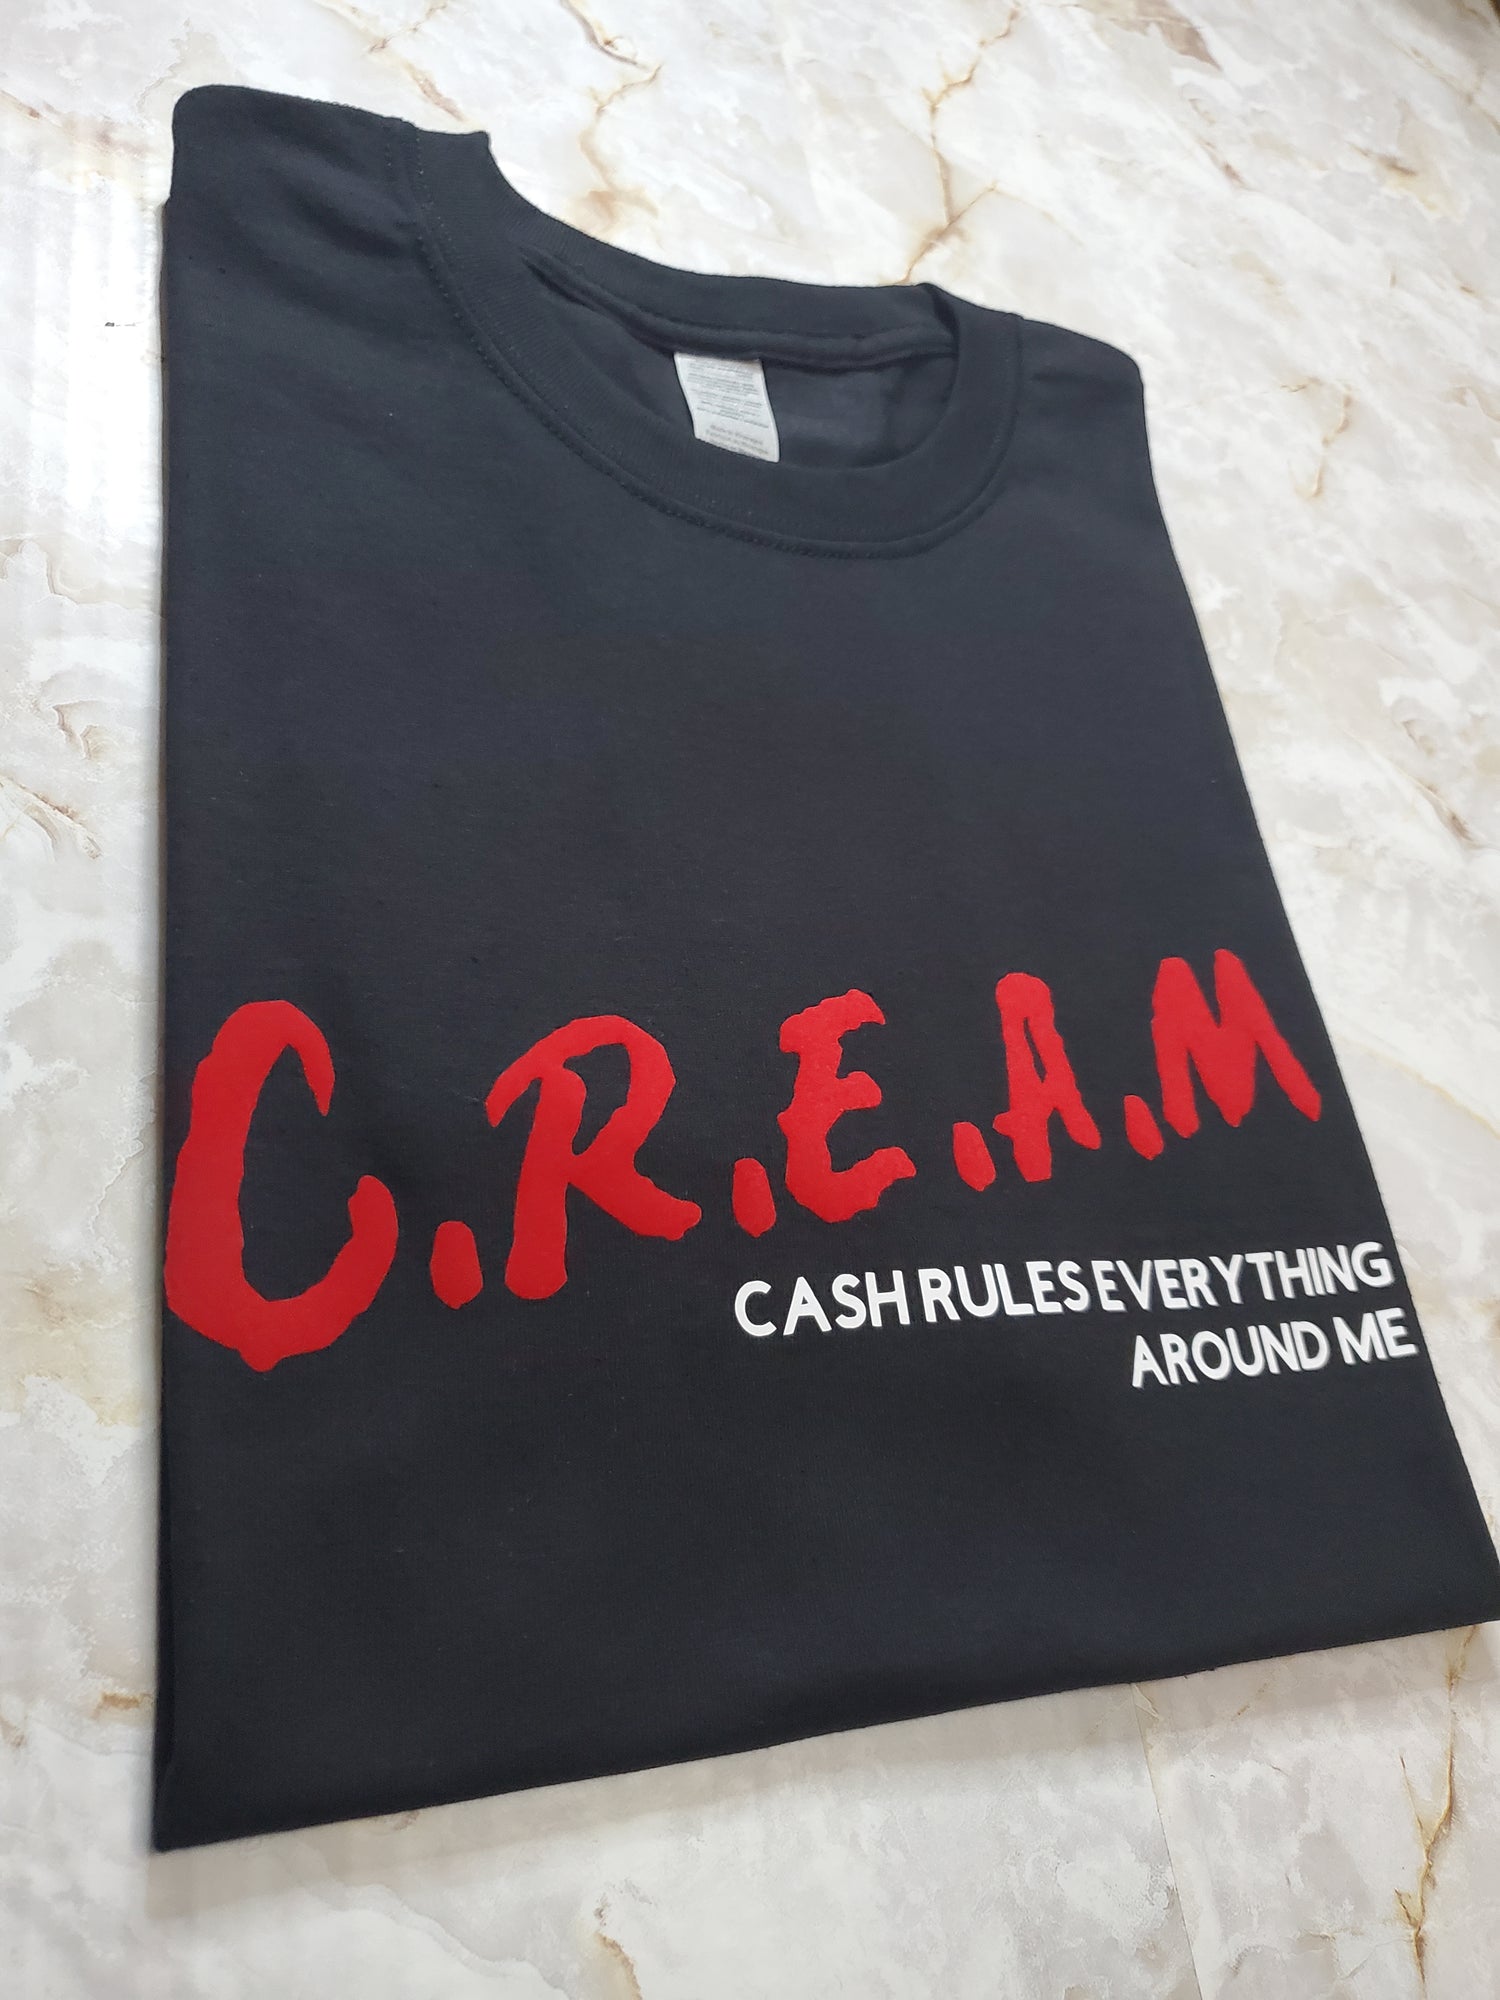 C.R.E.A.M T-Shirt - Centre Ave Clothing Co.